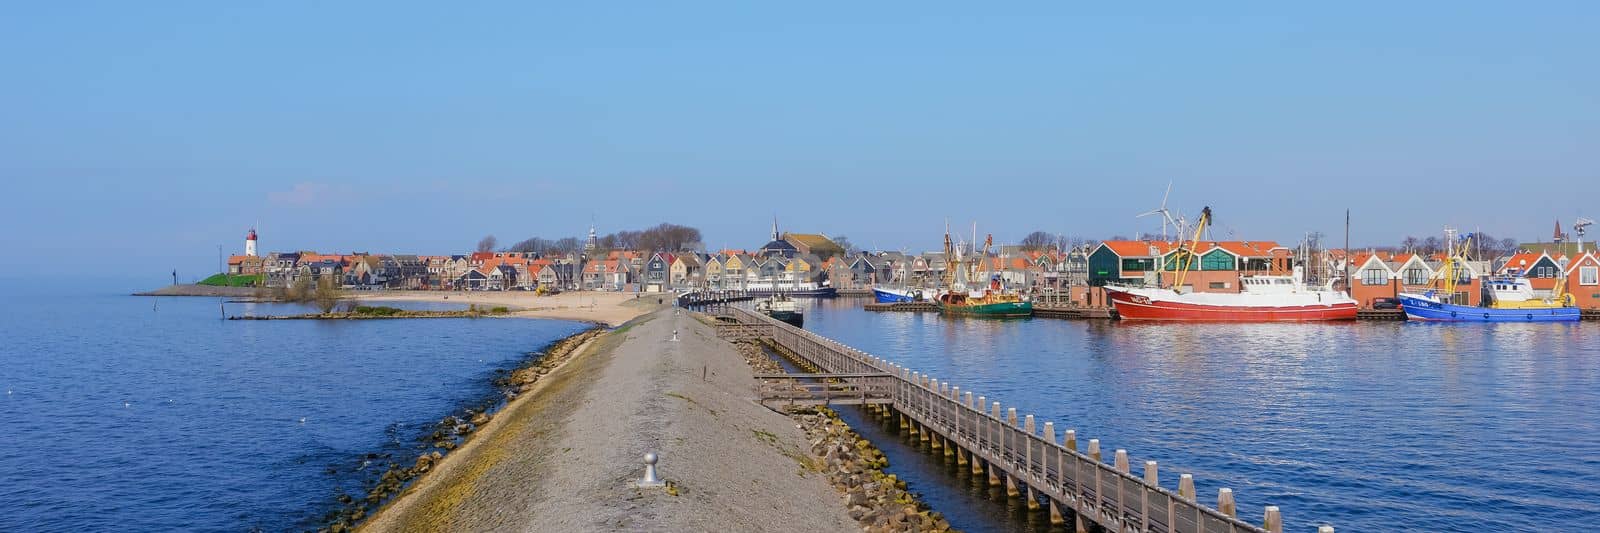 Urk Flevoland Netherlands May 2017 fishing harbor of Urk Holland with fishing boats Fishing village Urk.